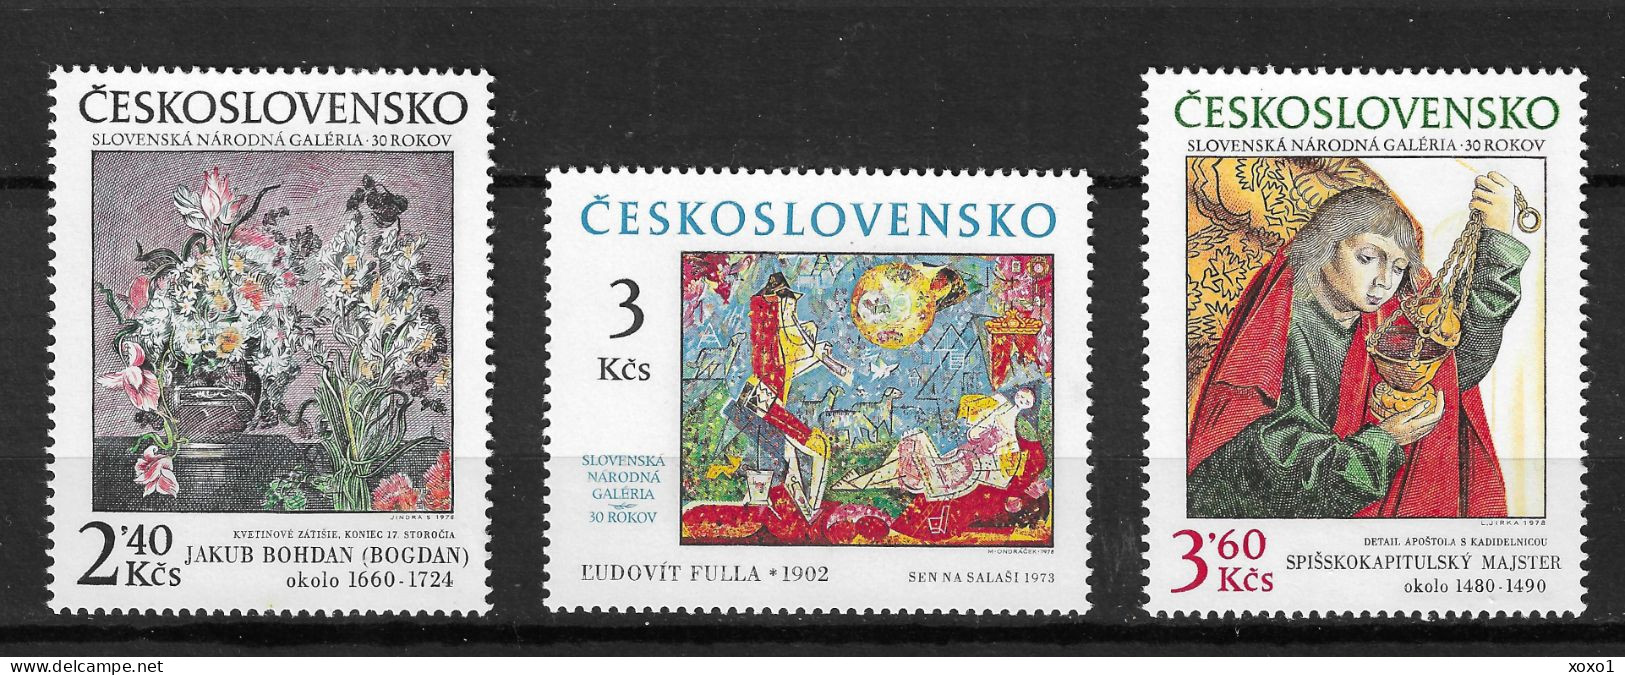 Czechoslovakia 1978 MiNr. 2476 - 2478 Slovak National Gallery, Bratislava, Art, Painting 3v  MNH**  4.50 € - Unused Stamps